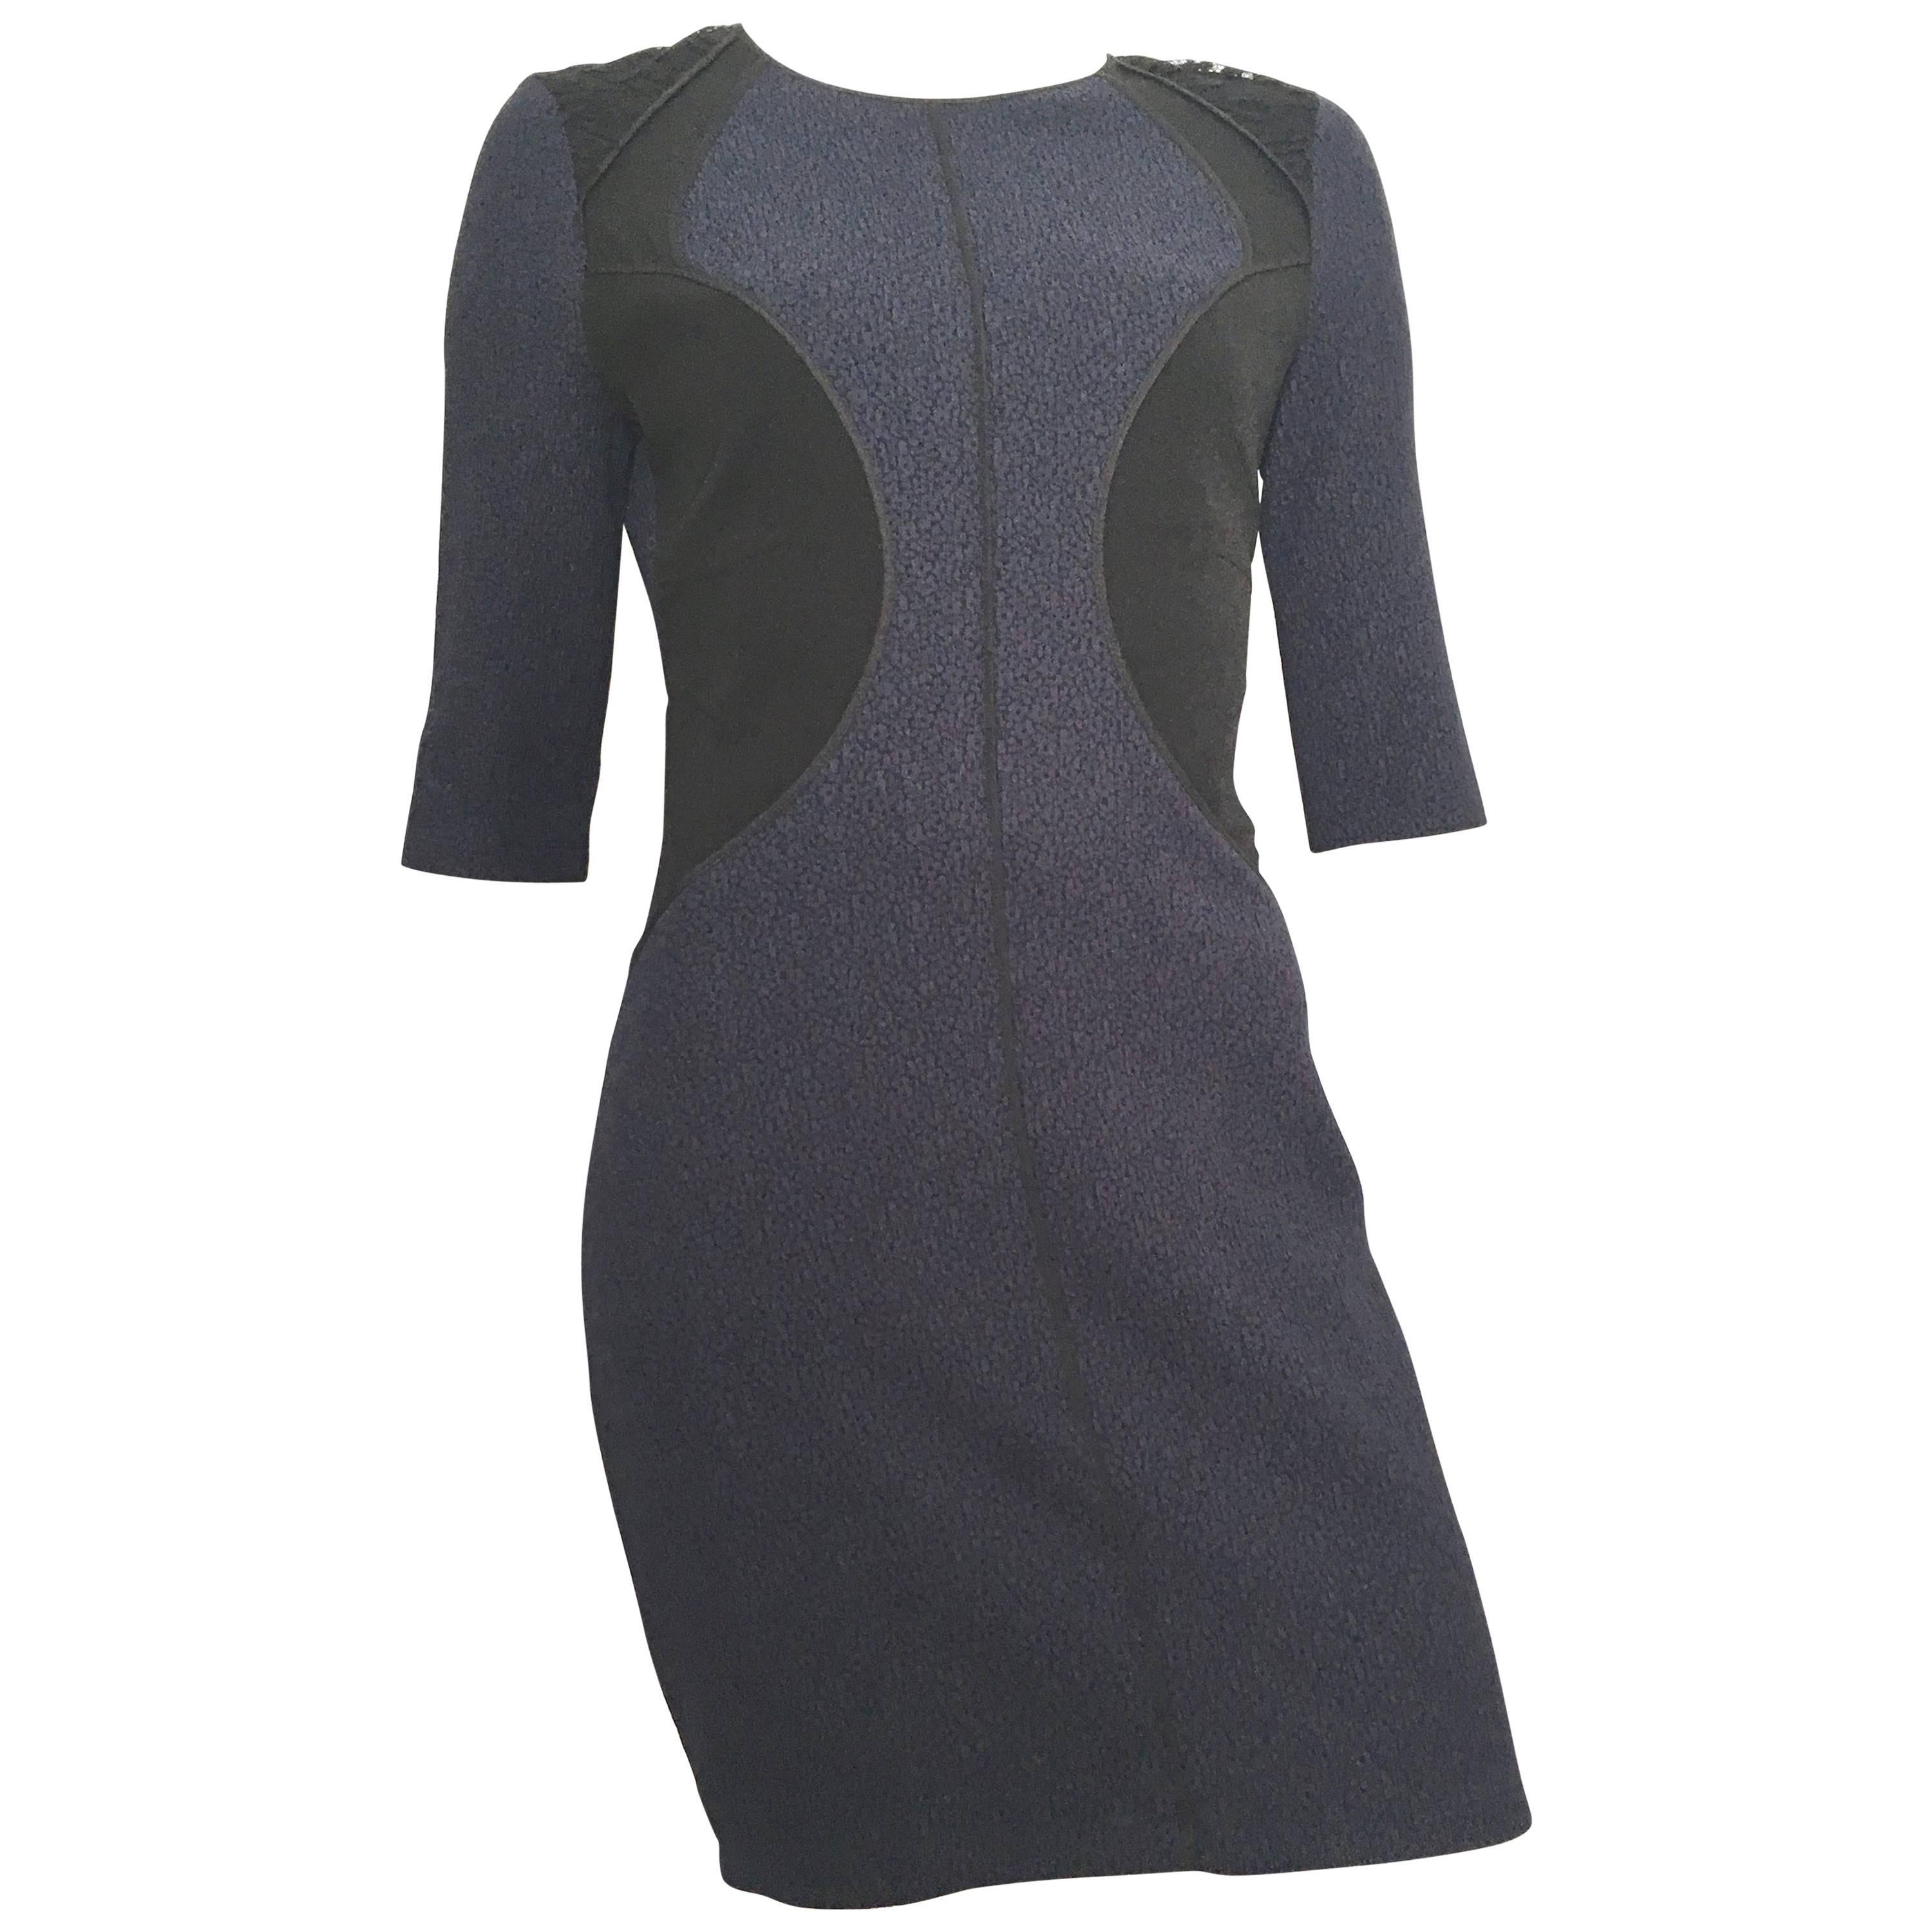 Nina Ricci Silk Navy and Black Dress Size 8. For Sale